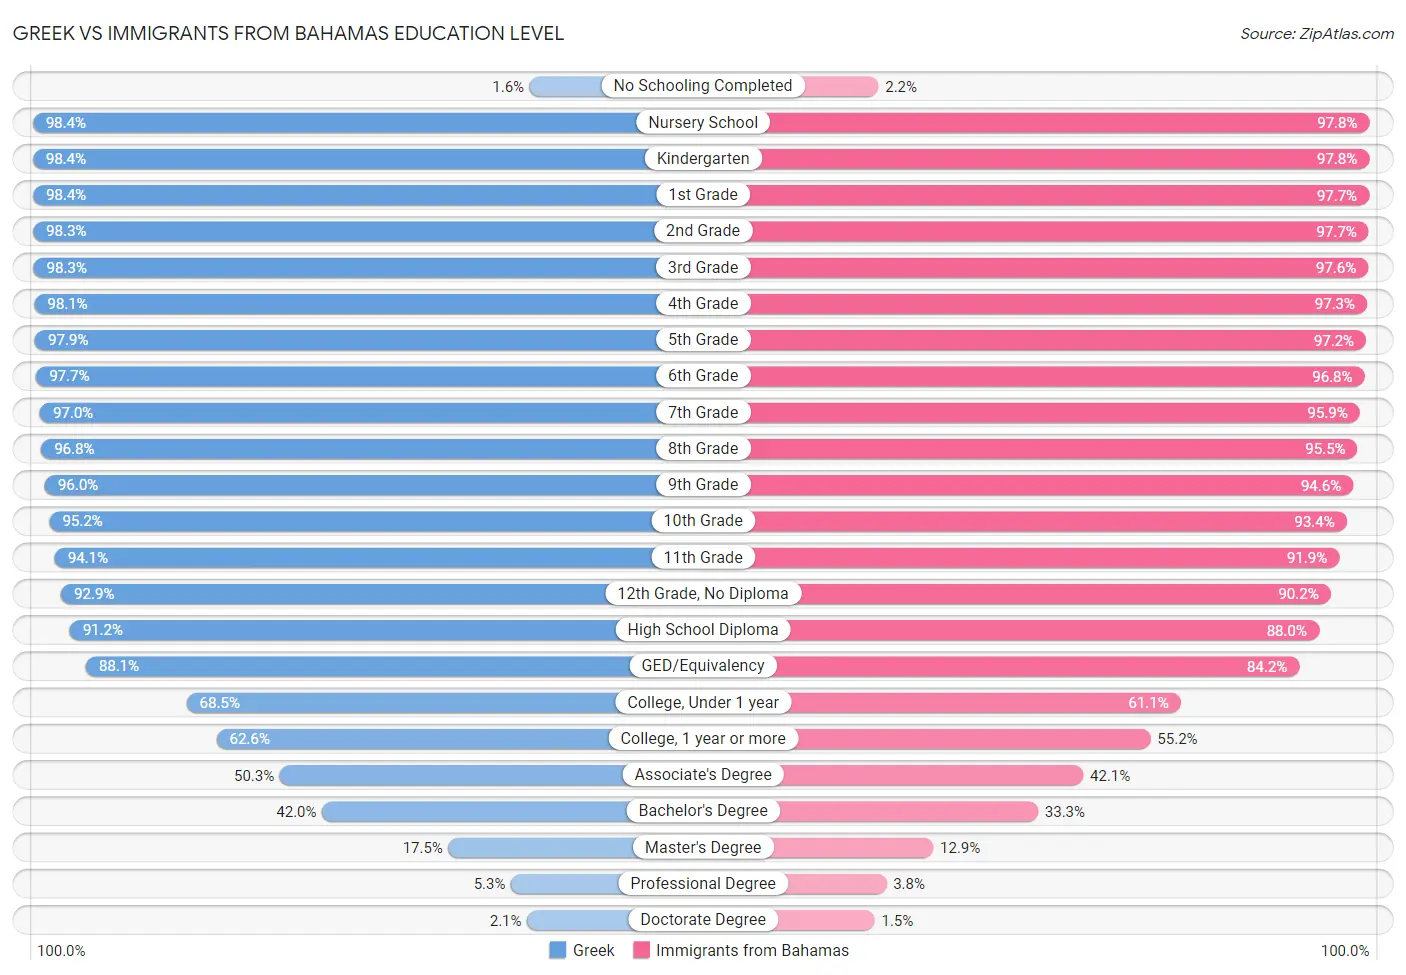 Greek vs Immigrants from Bahamas Education Level